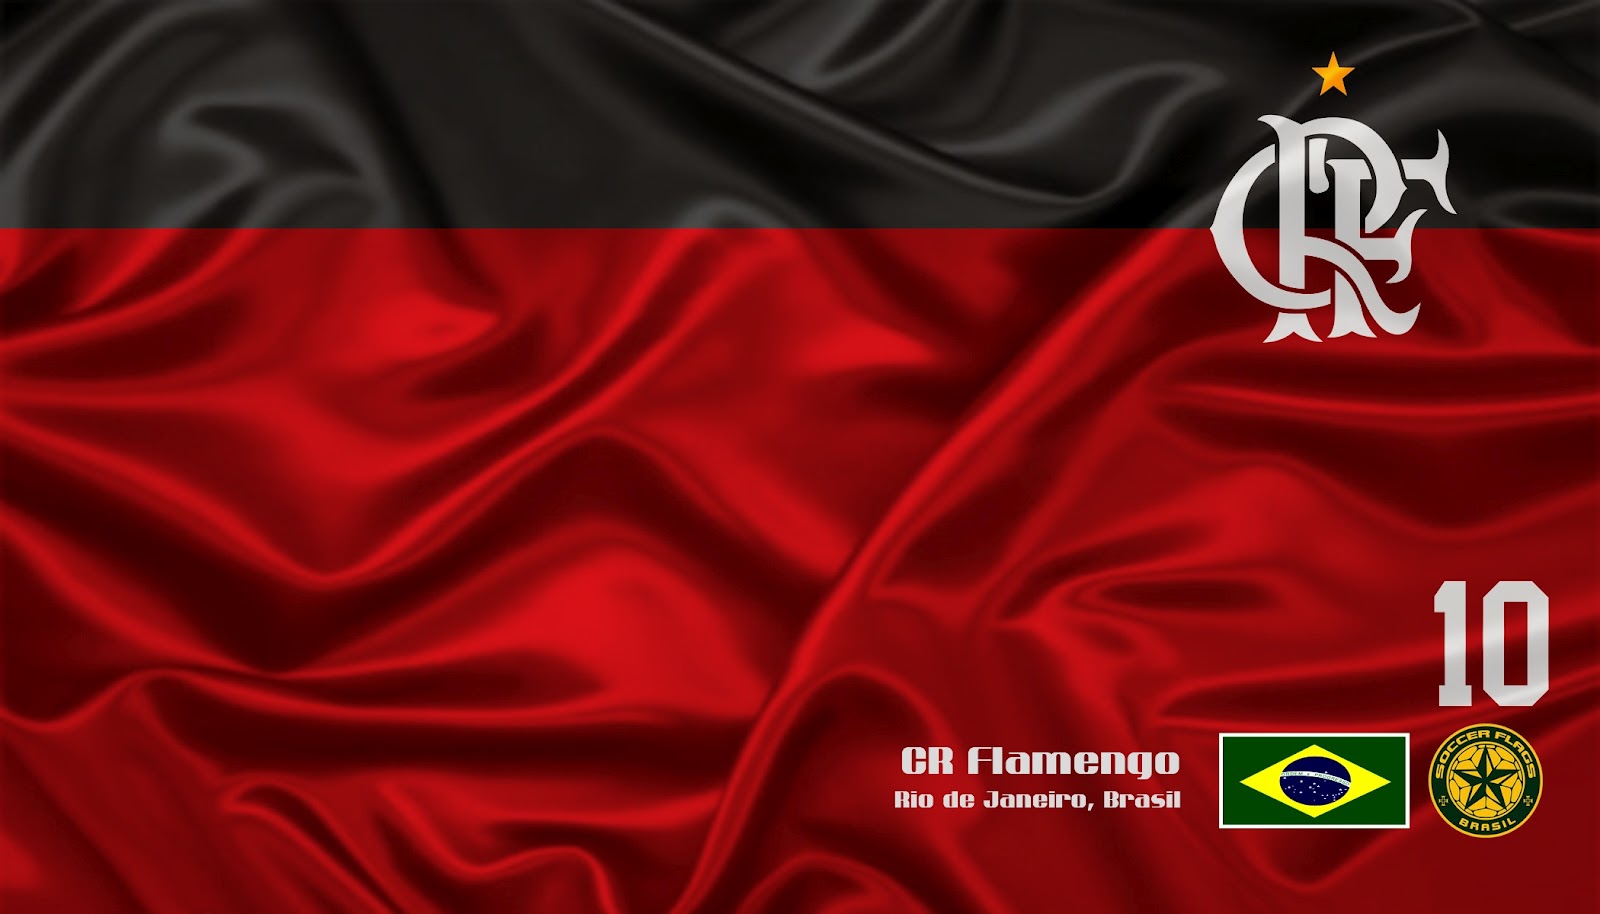 Wallpaper+Flamengo.jpg